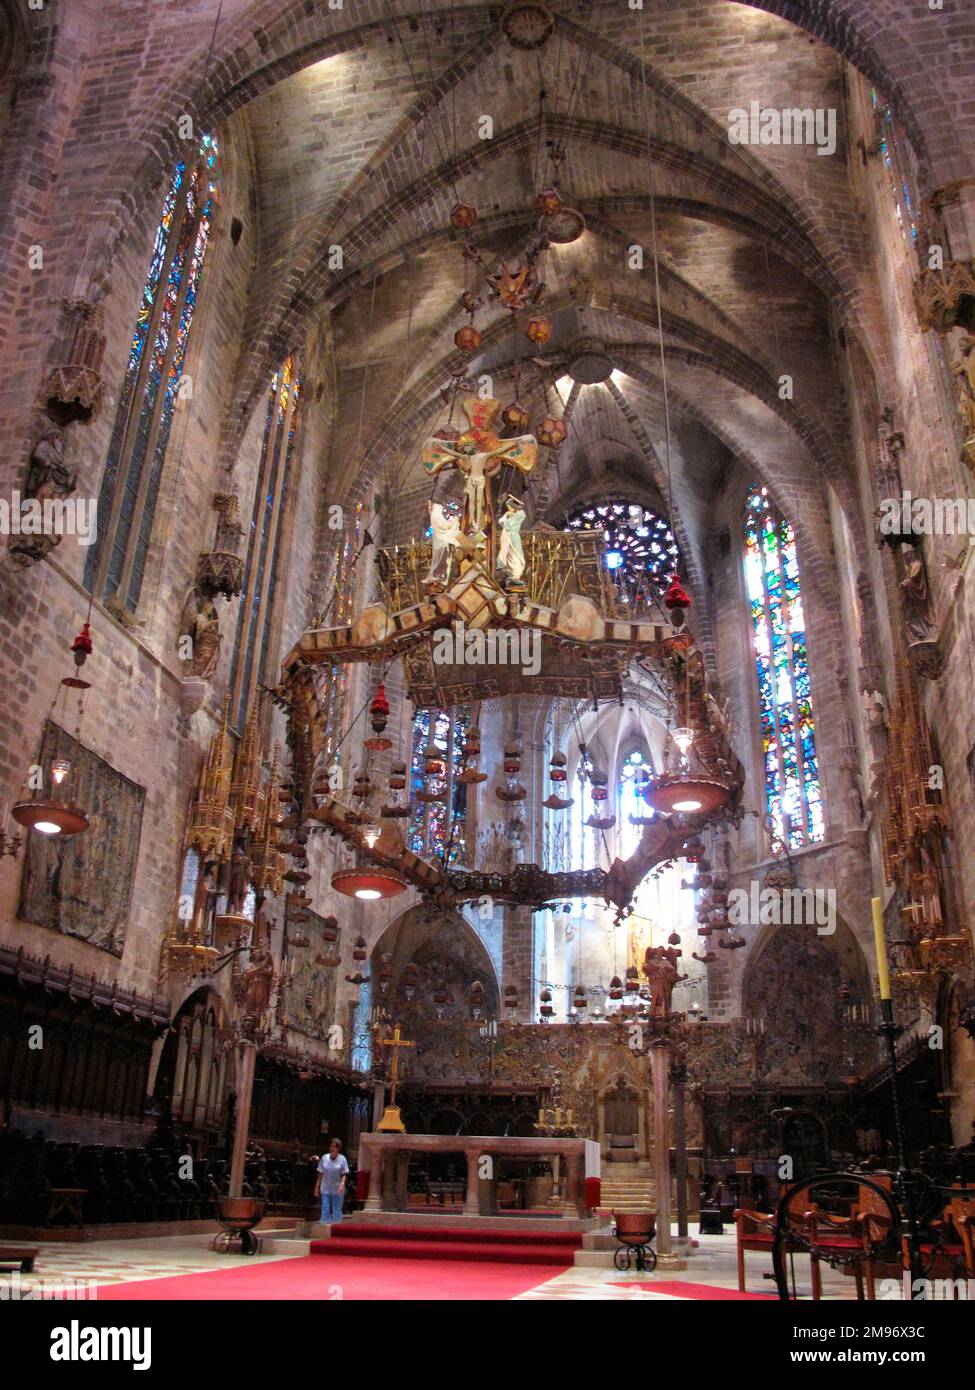 Palma, Mallorca, Spain. The Alter section of the Cathedral sa Seu. Stock Photo